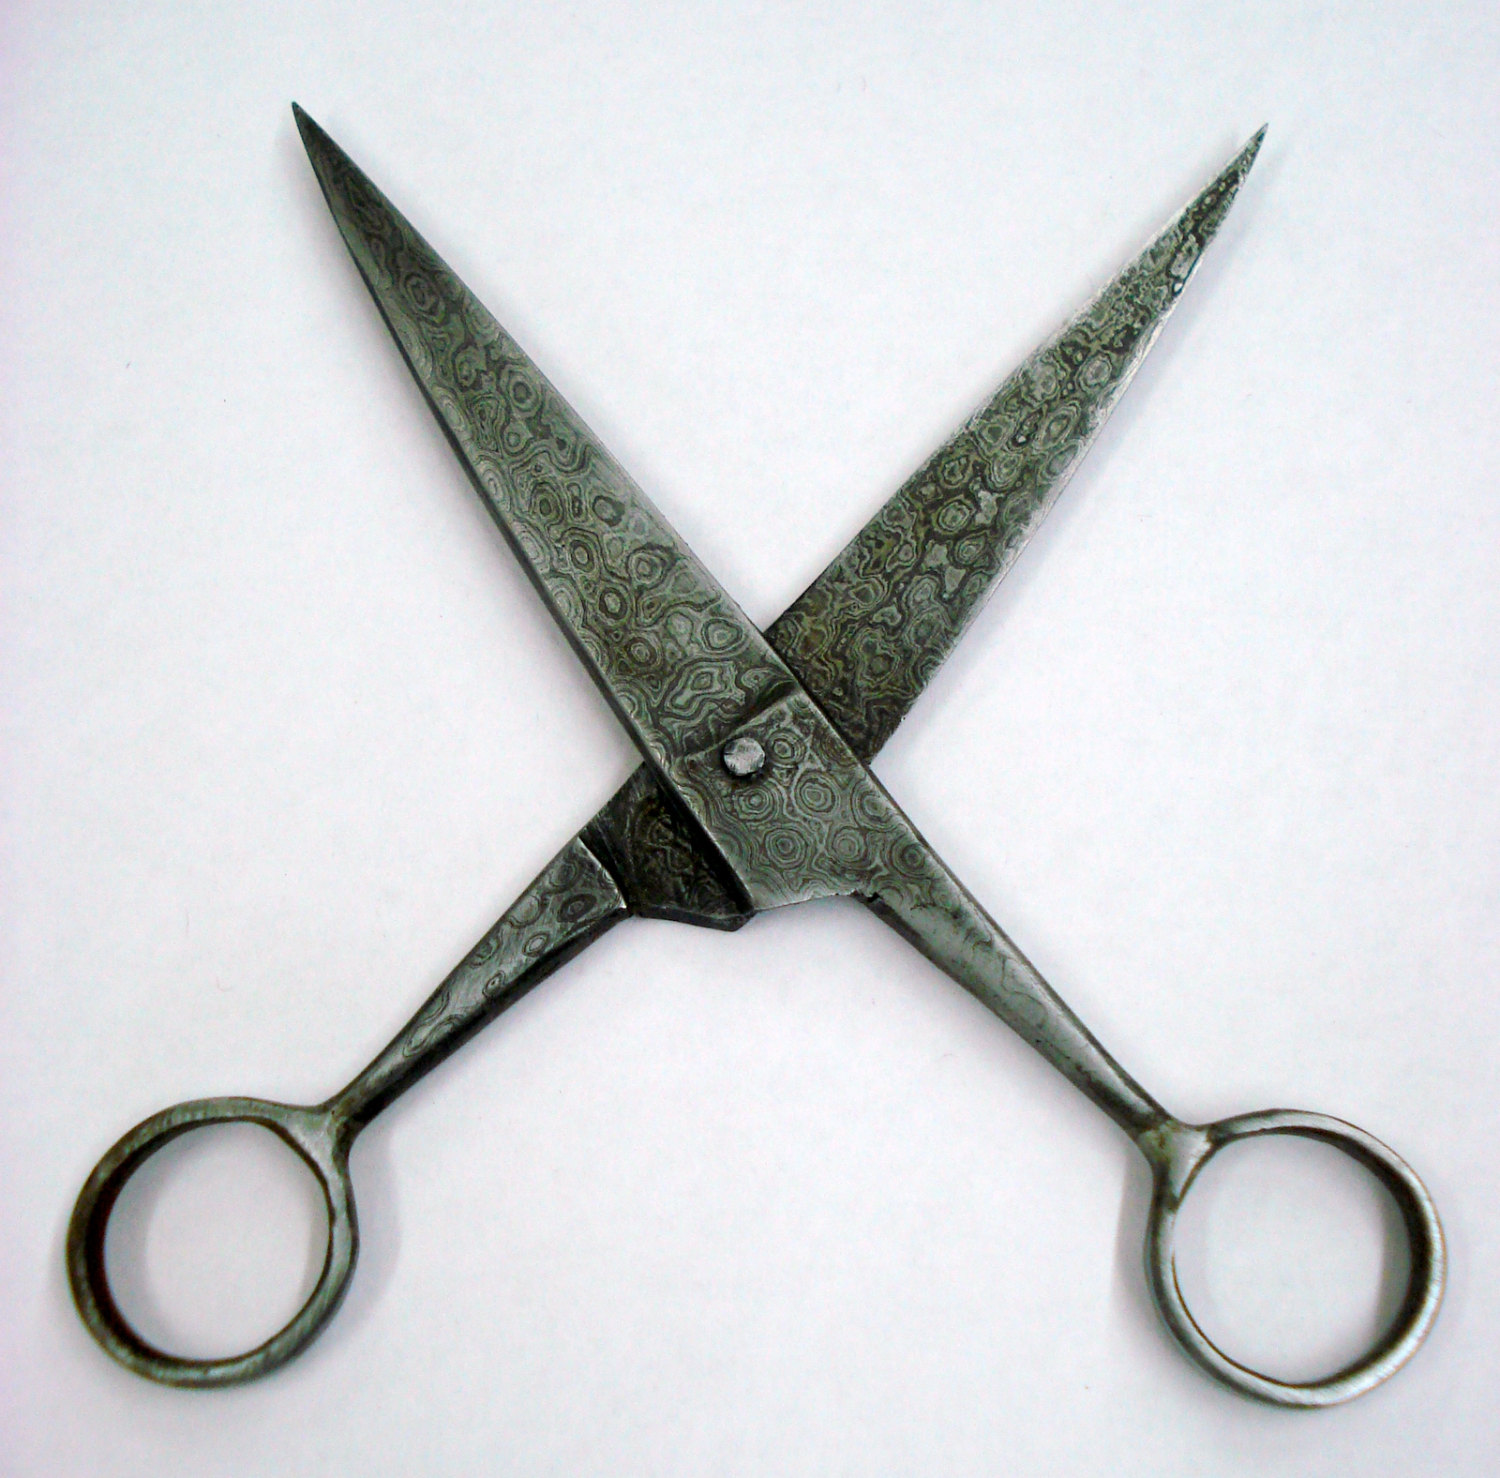 Handmade Damascus steel blade scissors shears from rajasthan